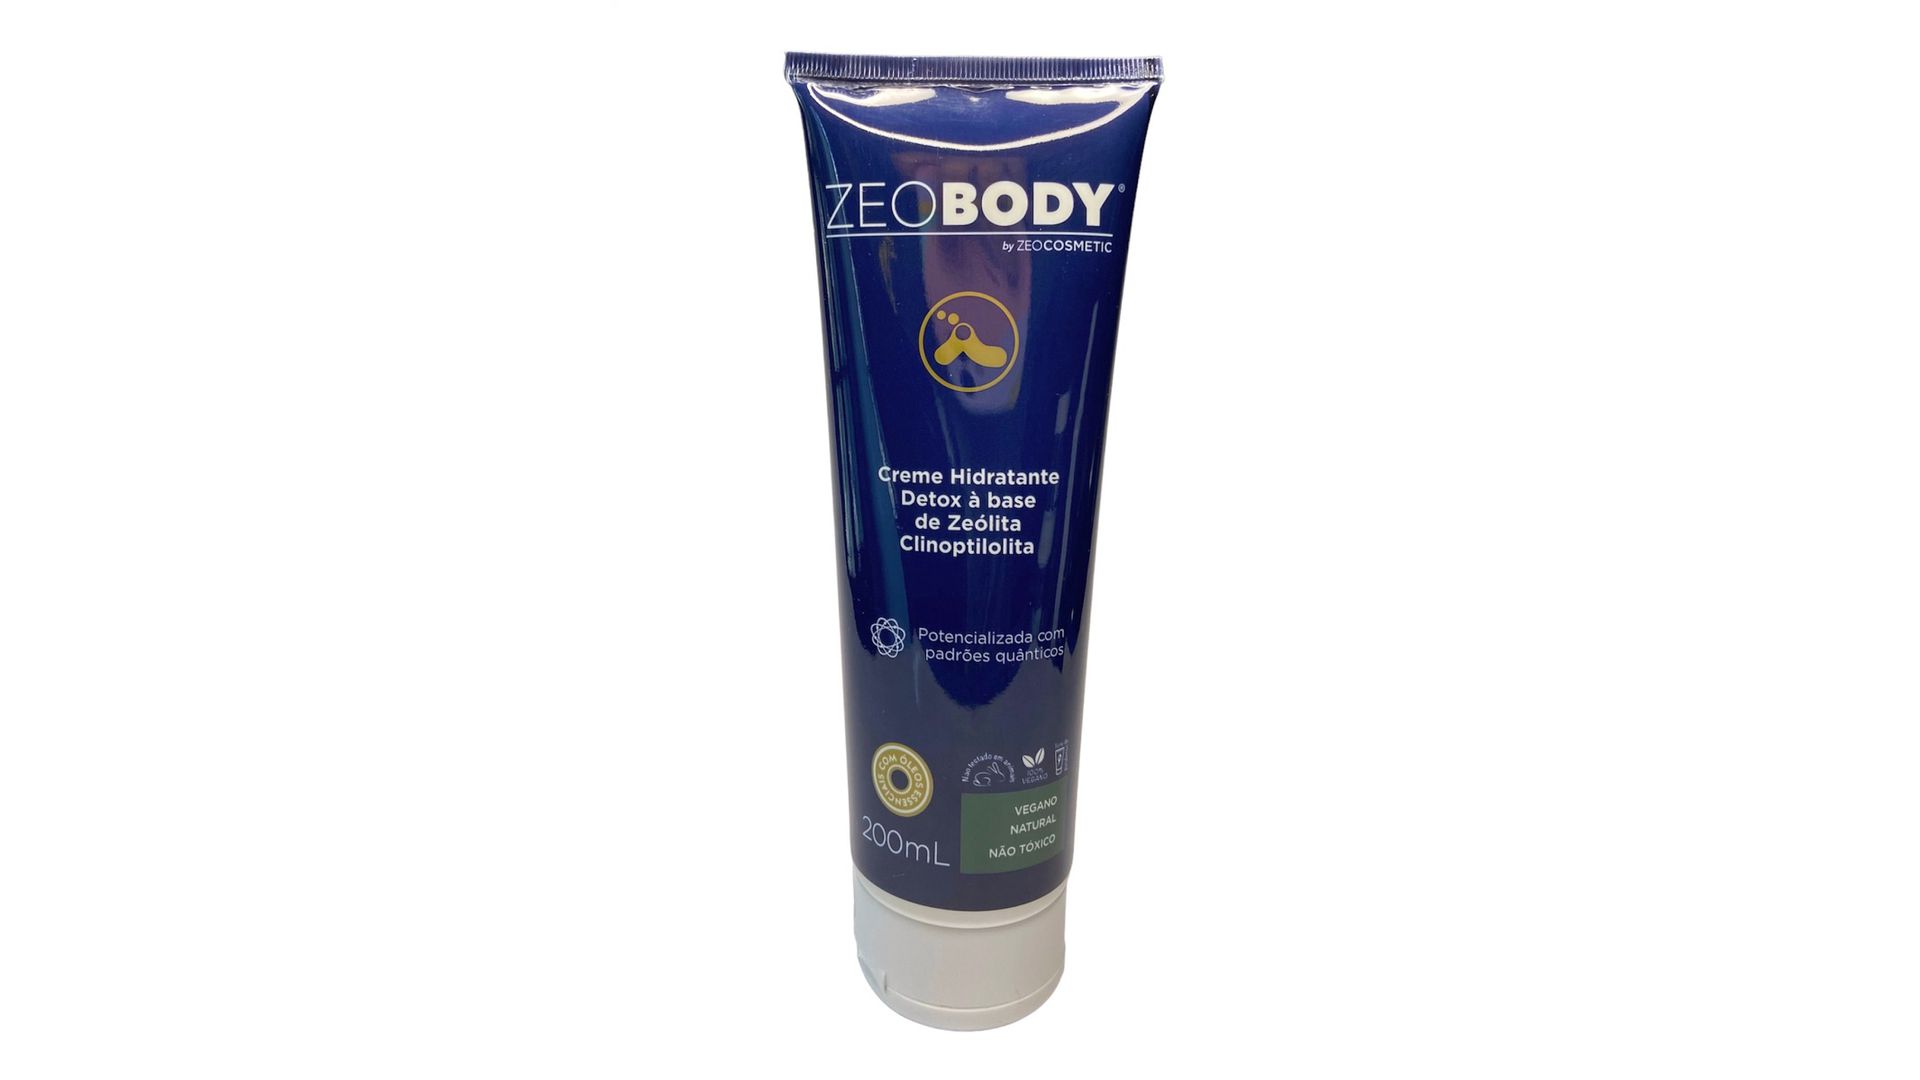 Creme Hidratante Detox à base de Zeólita Zeobody Perfumado 200ml